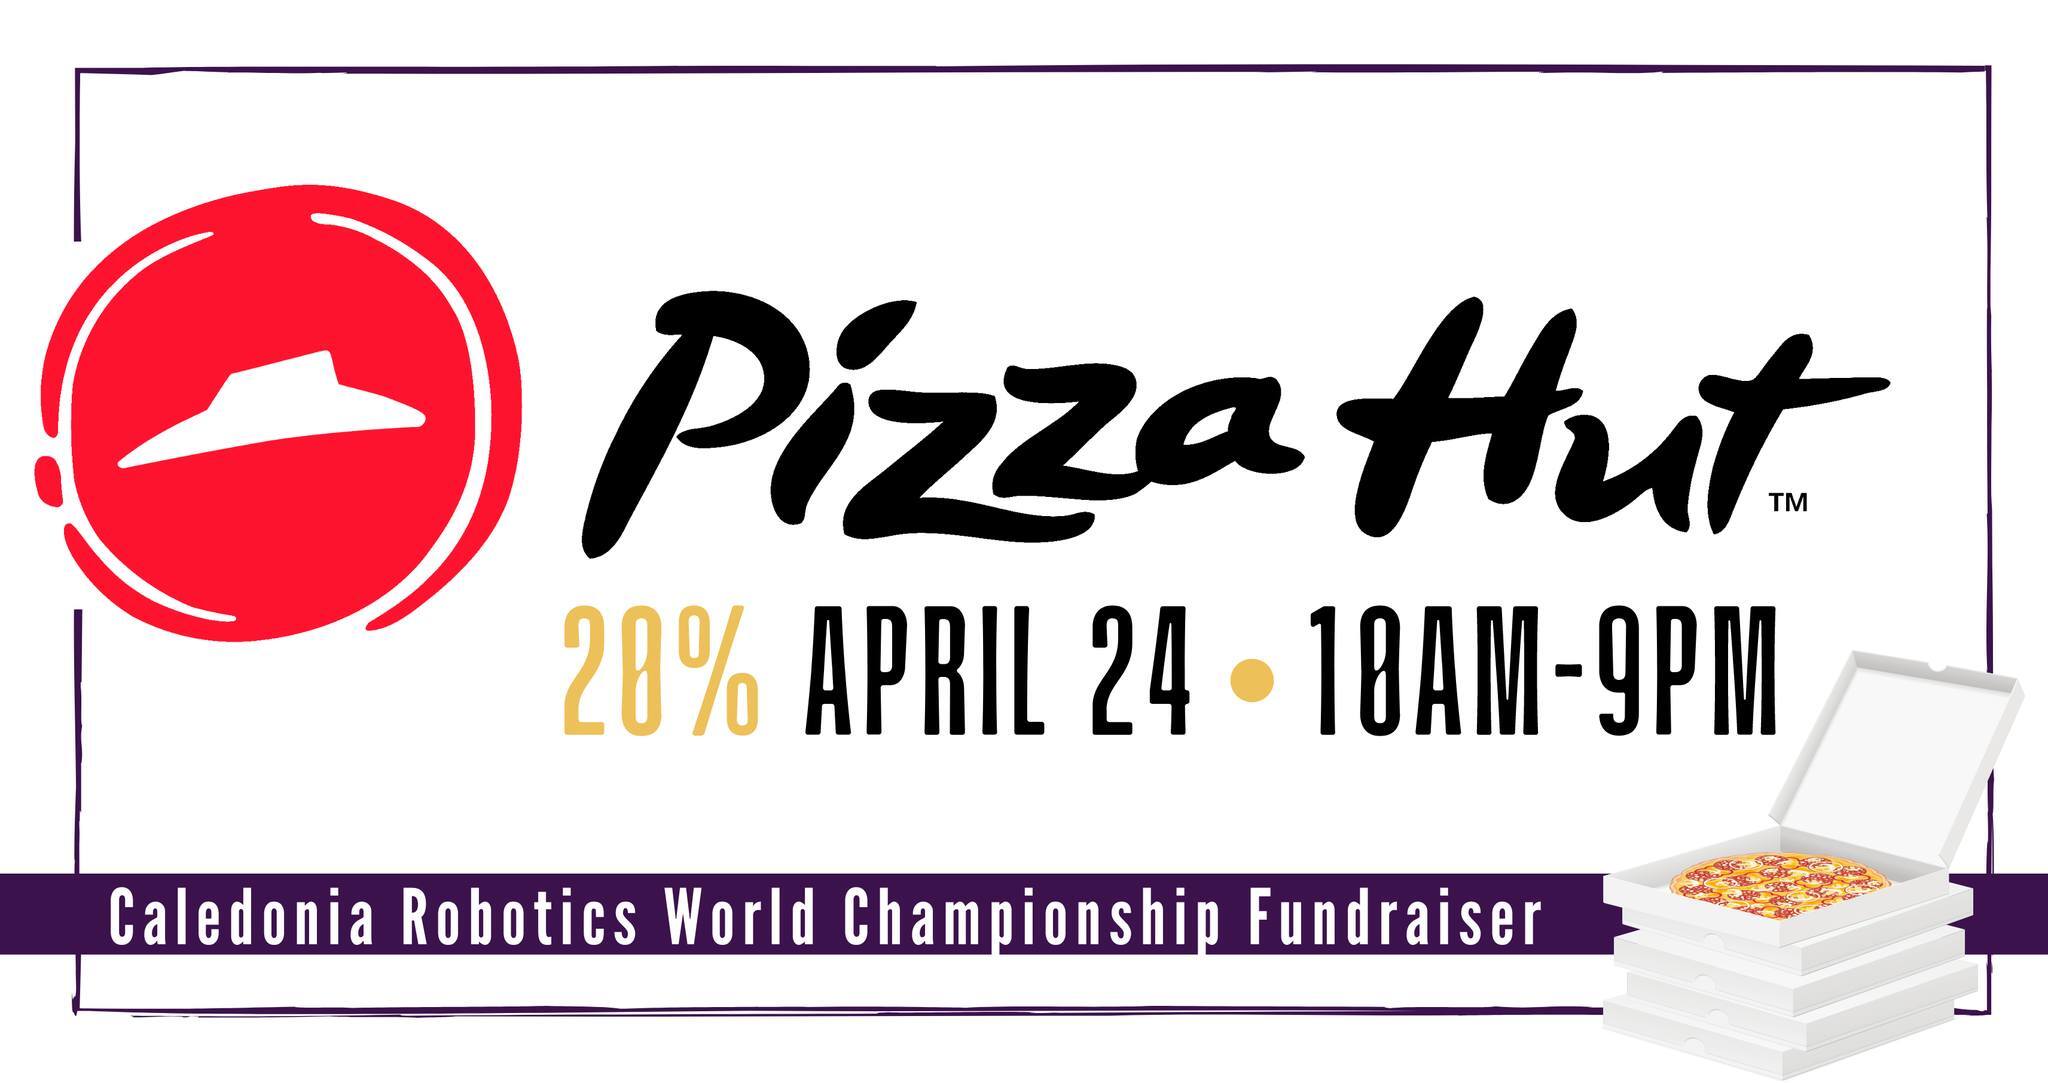 2023 Worlds Pizza Hut Fundraiser